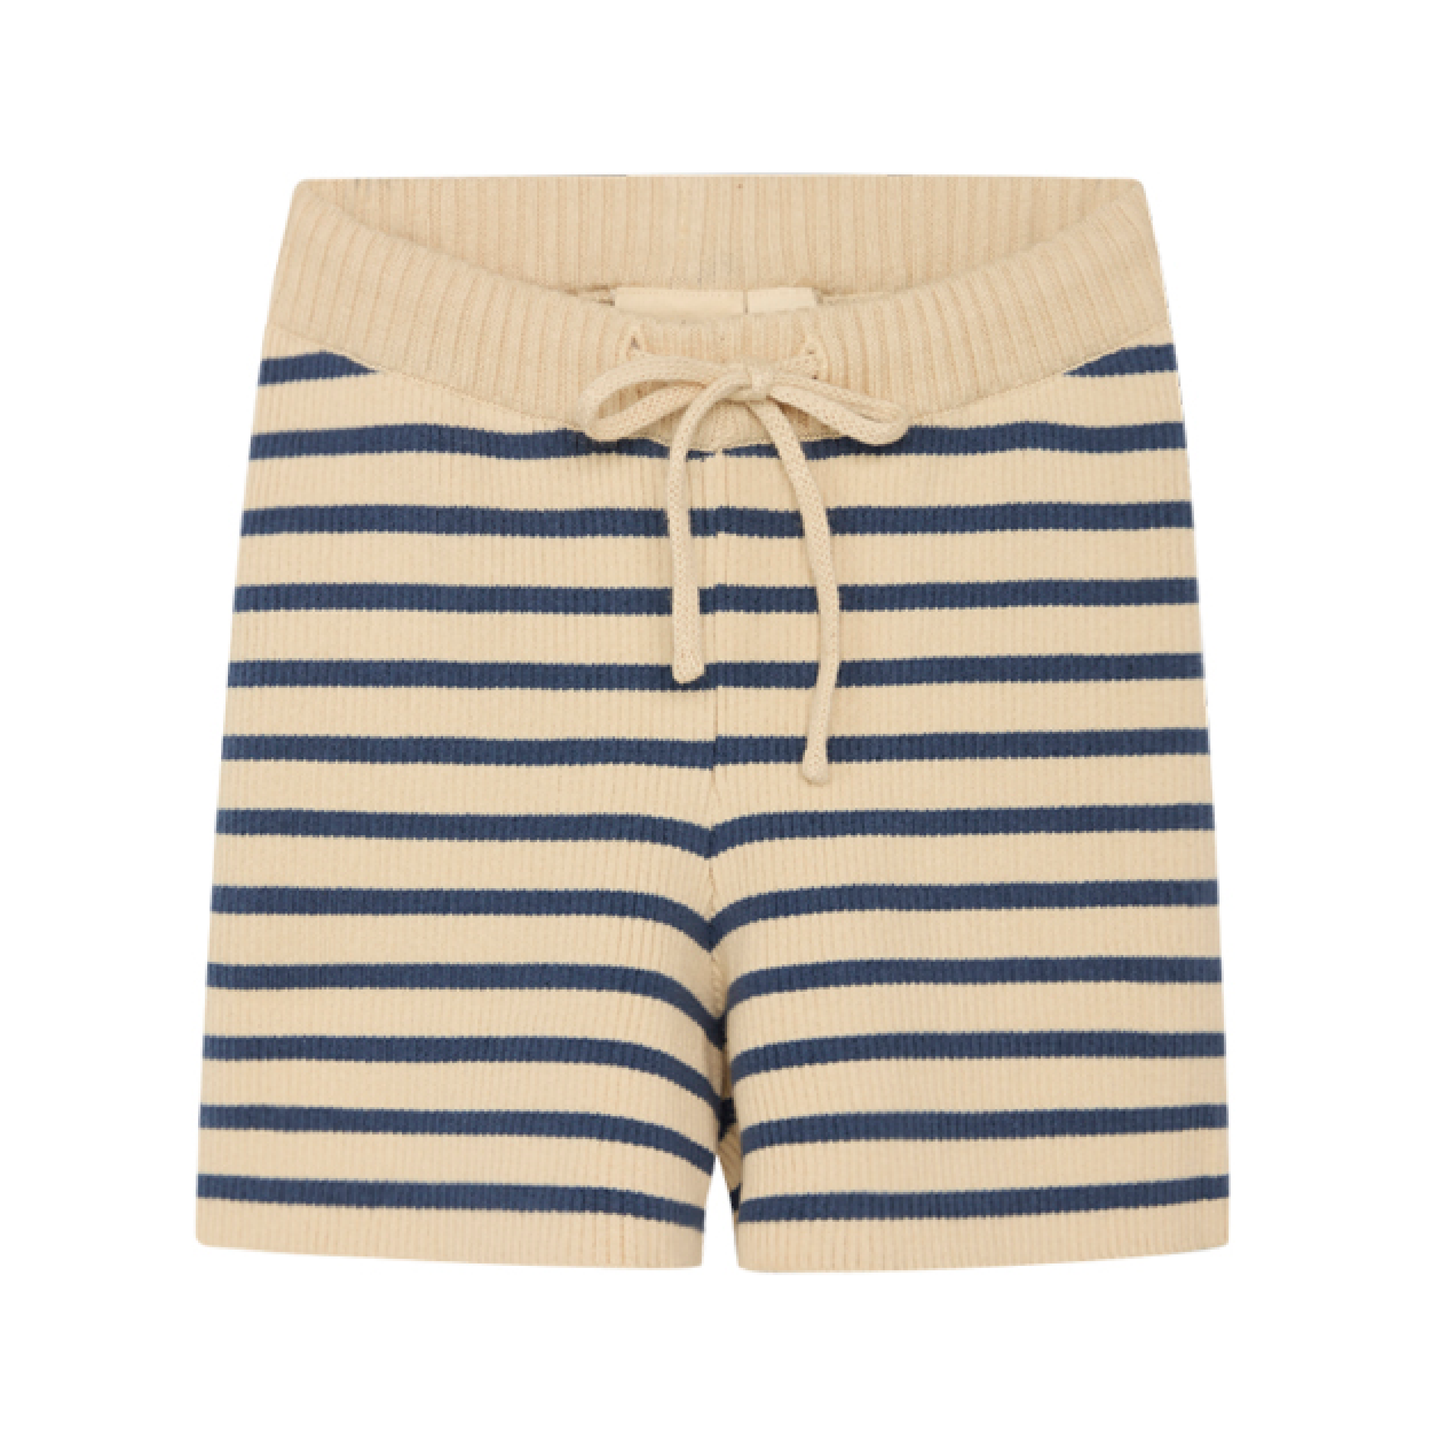 Flye Shorts, Navy Midnight/Warm Cotton